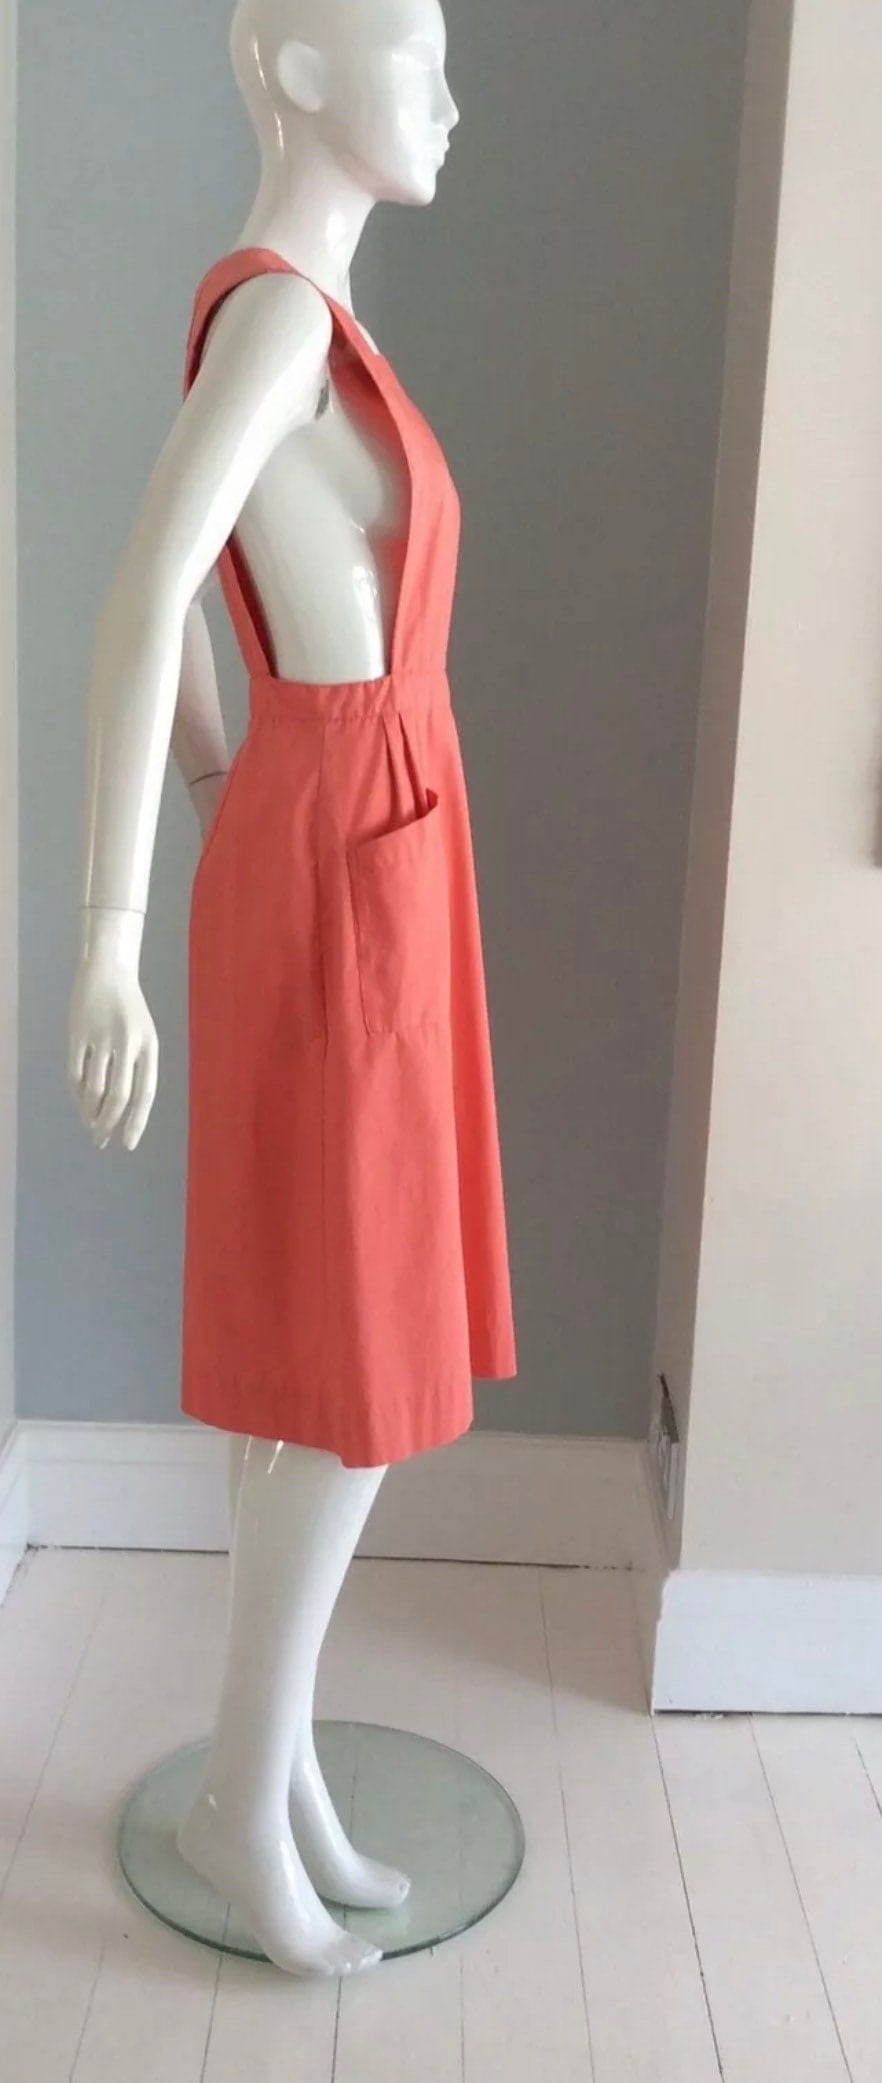 1950s Vintage Pinafore Dress Coral Pink Cotton Uniform - True Vintage sleeveless pinafore coral workwear